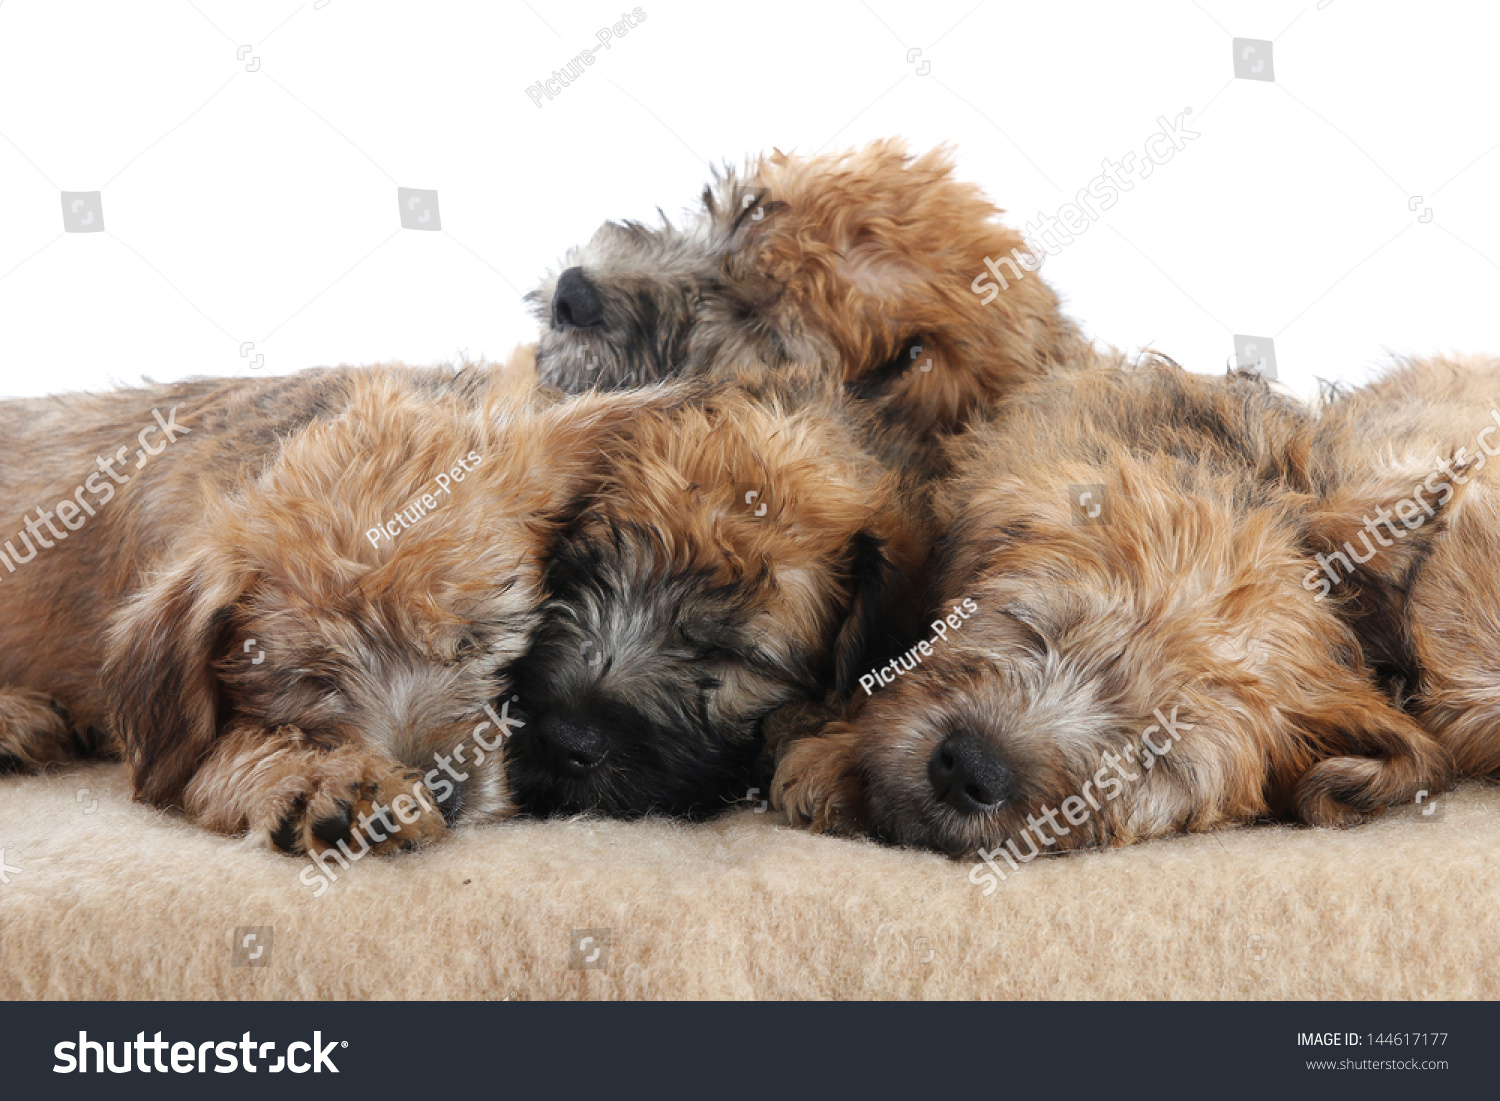 Soft Coated Wheaten Terrier Puppies Animals Wildlife Stock Image 144617177